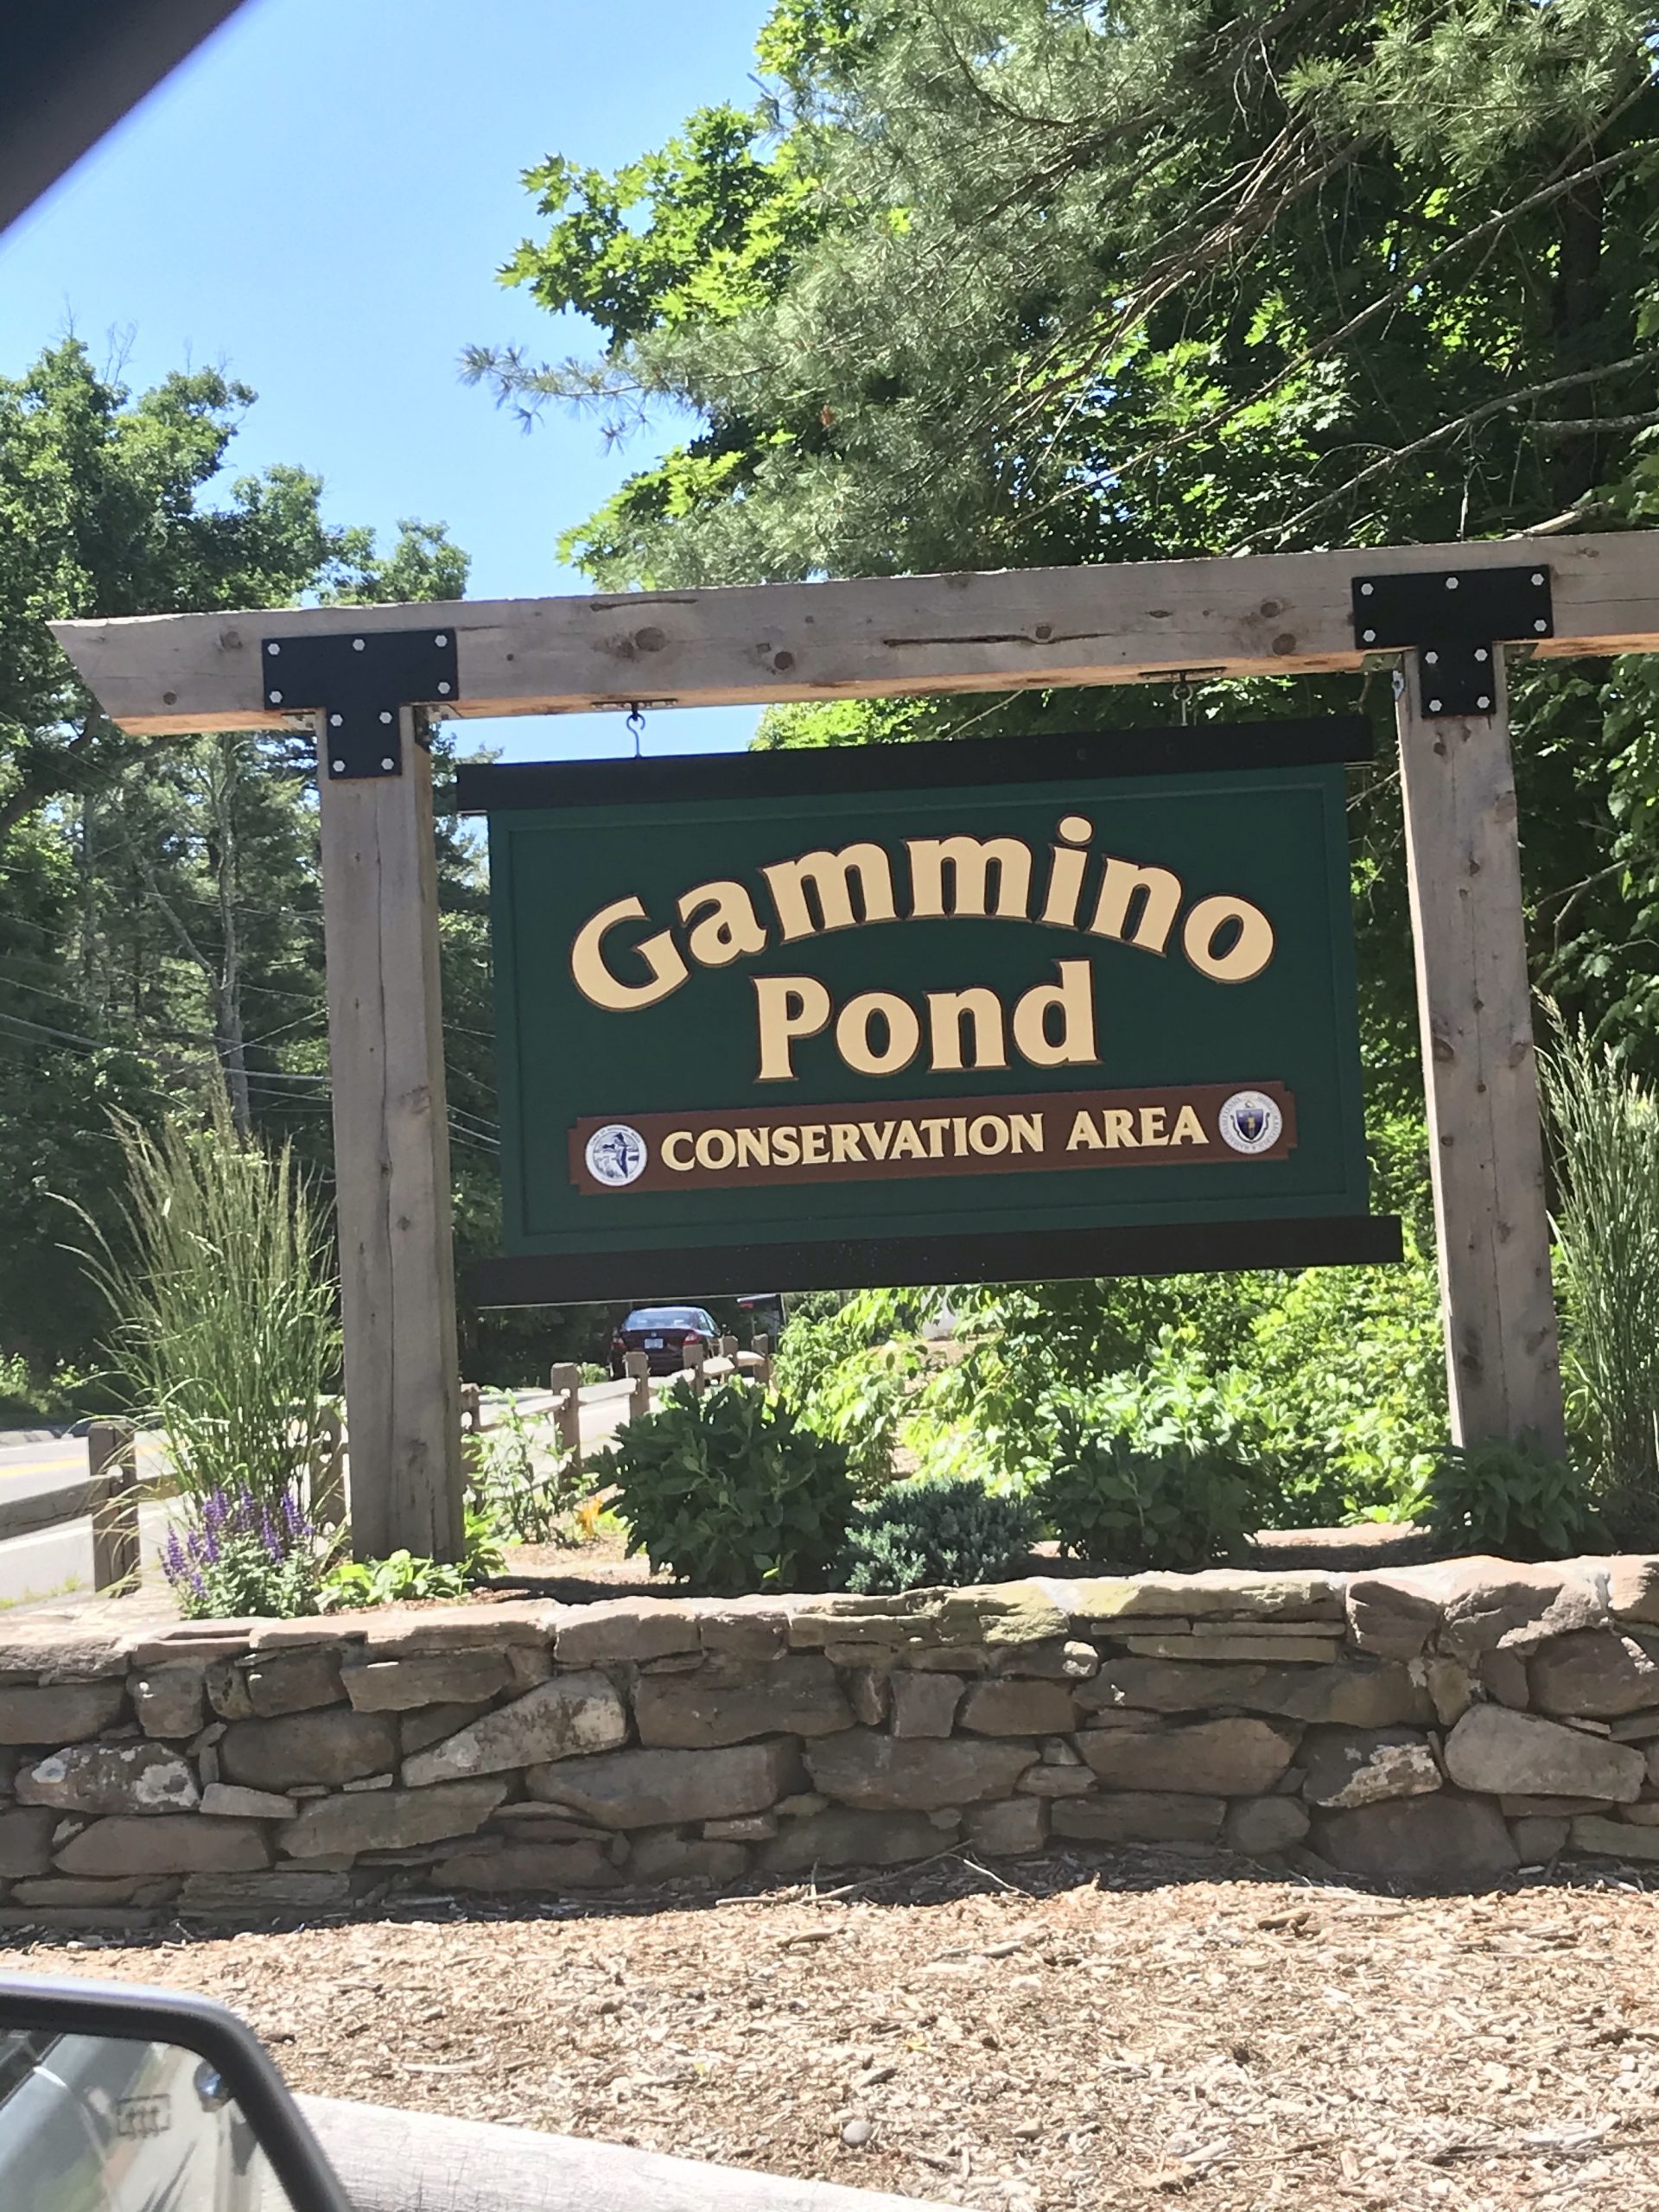 Gammino Pond hiking trails with kids Seekonk, MA